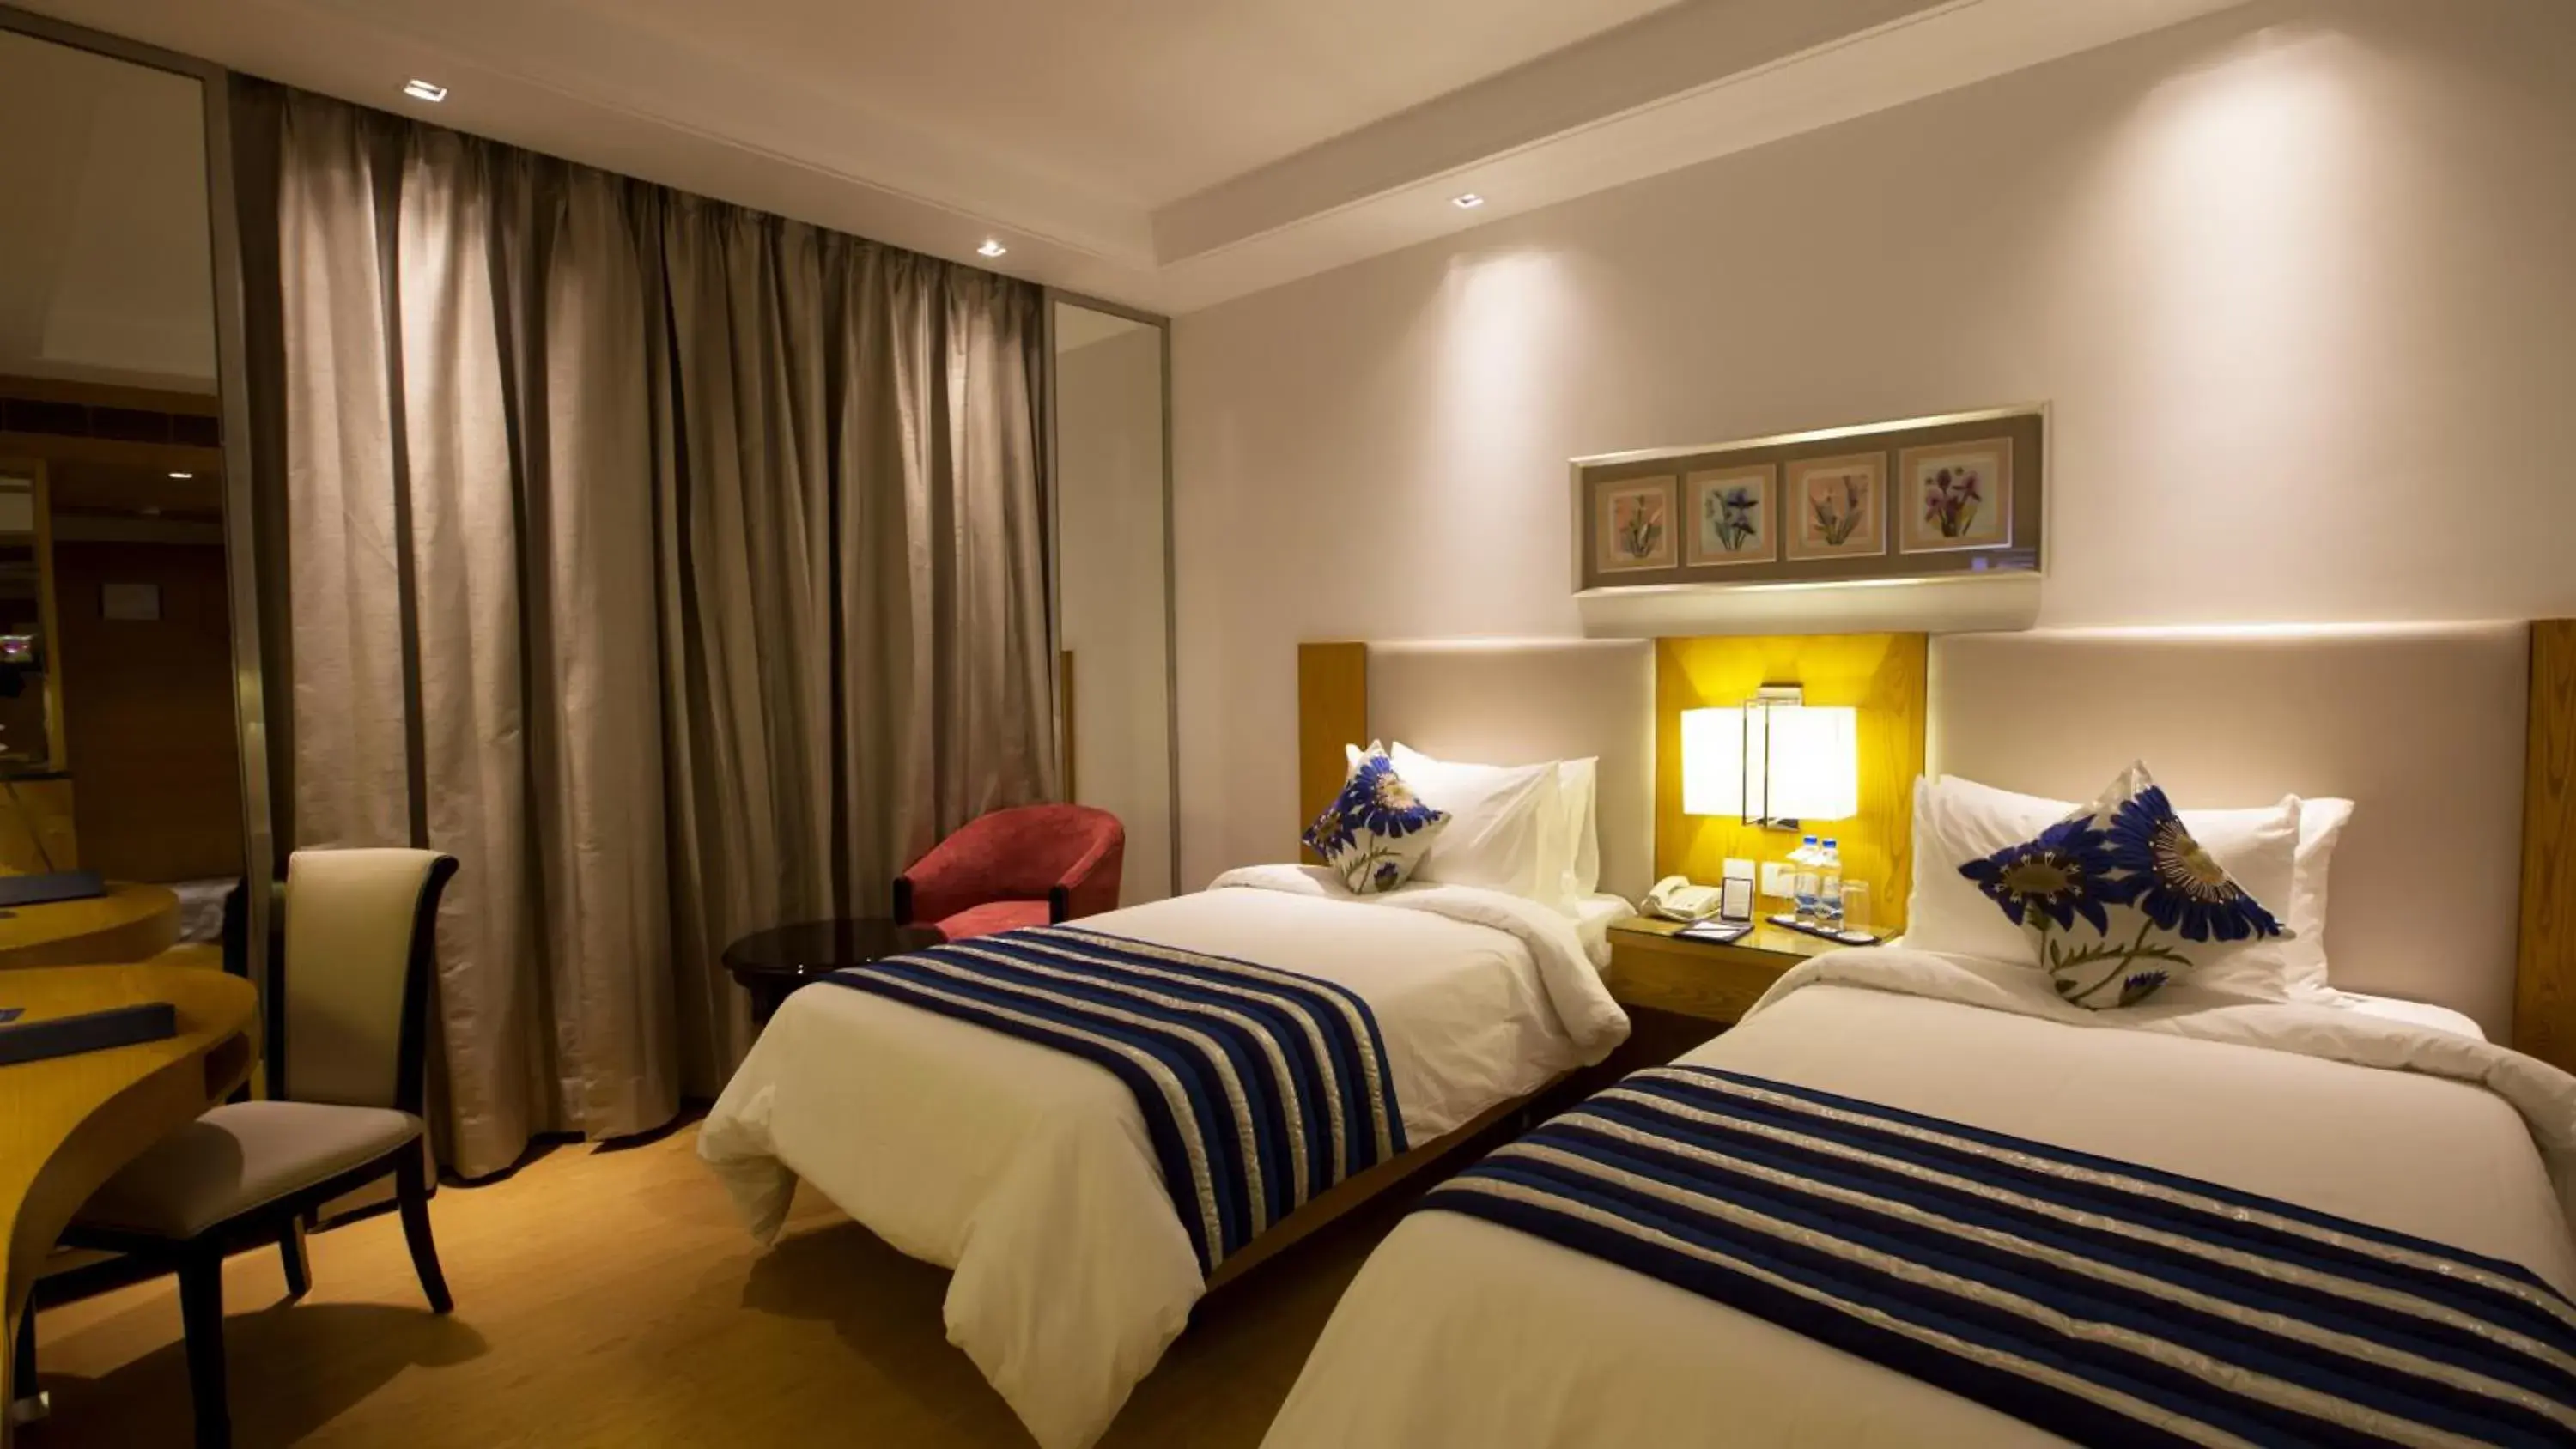 Bed, Room Photo in Golden Tulip Vasundhara Hotel and Suites